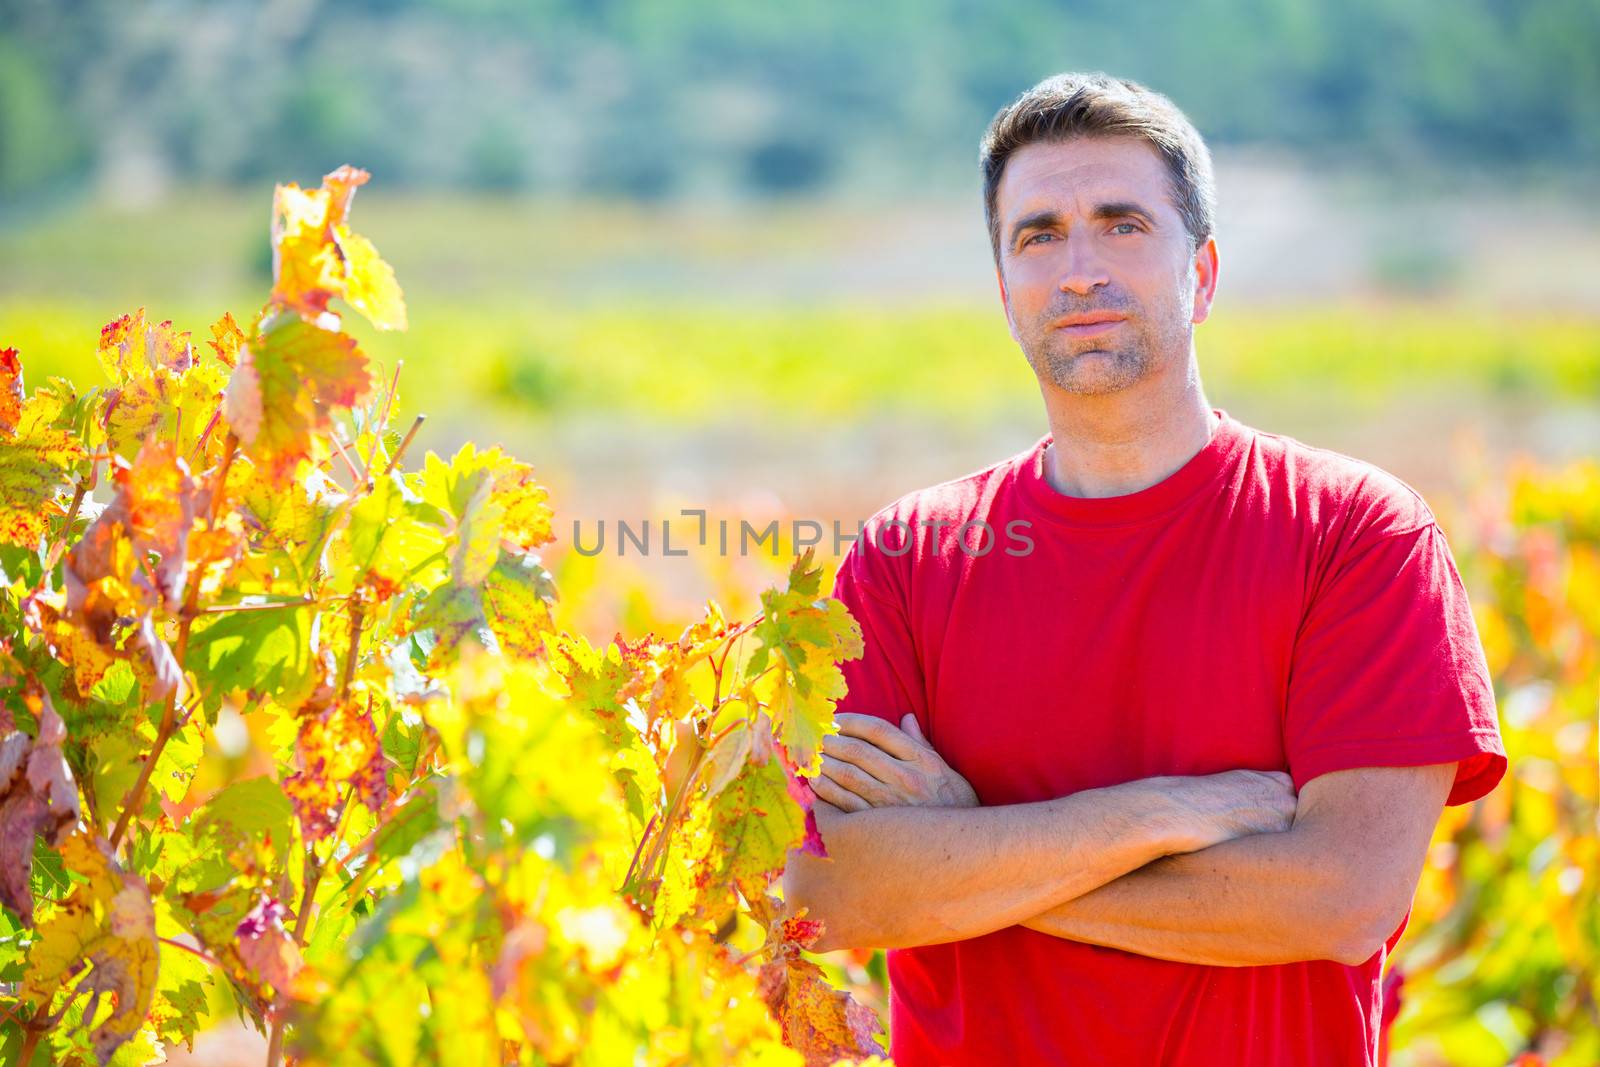 Harvester winemaker farmer proud of his vineyard in autumn golden red leaves at Mediterranean